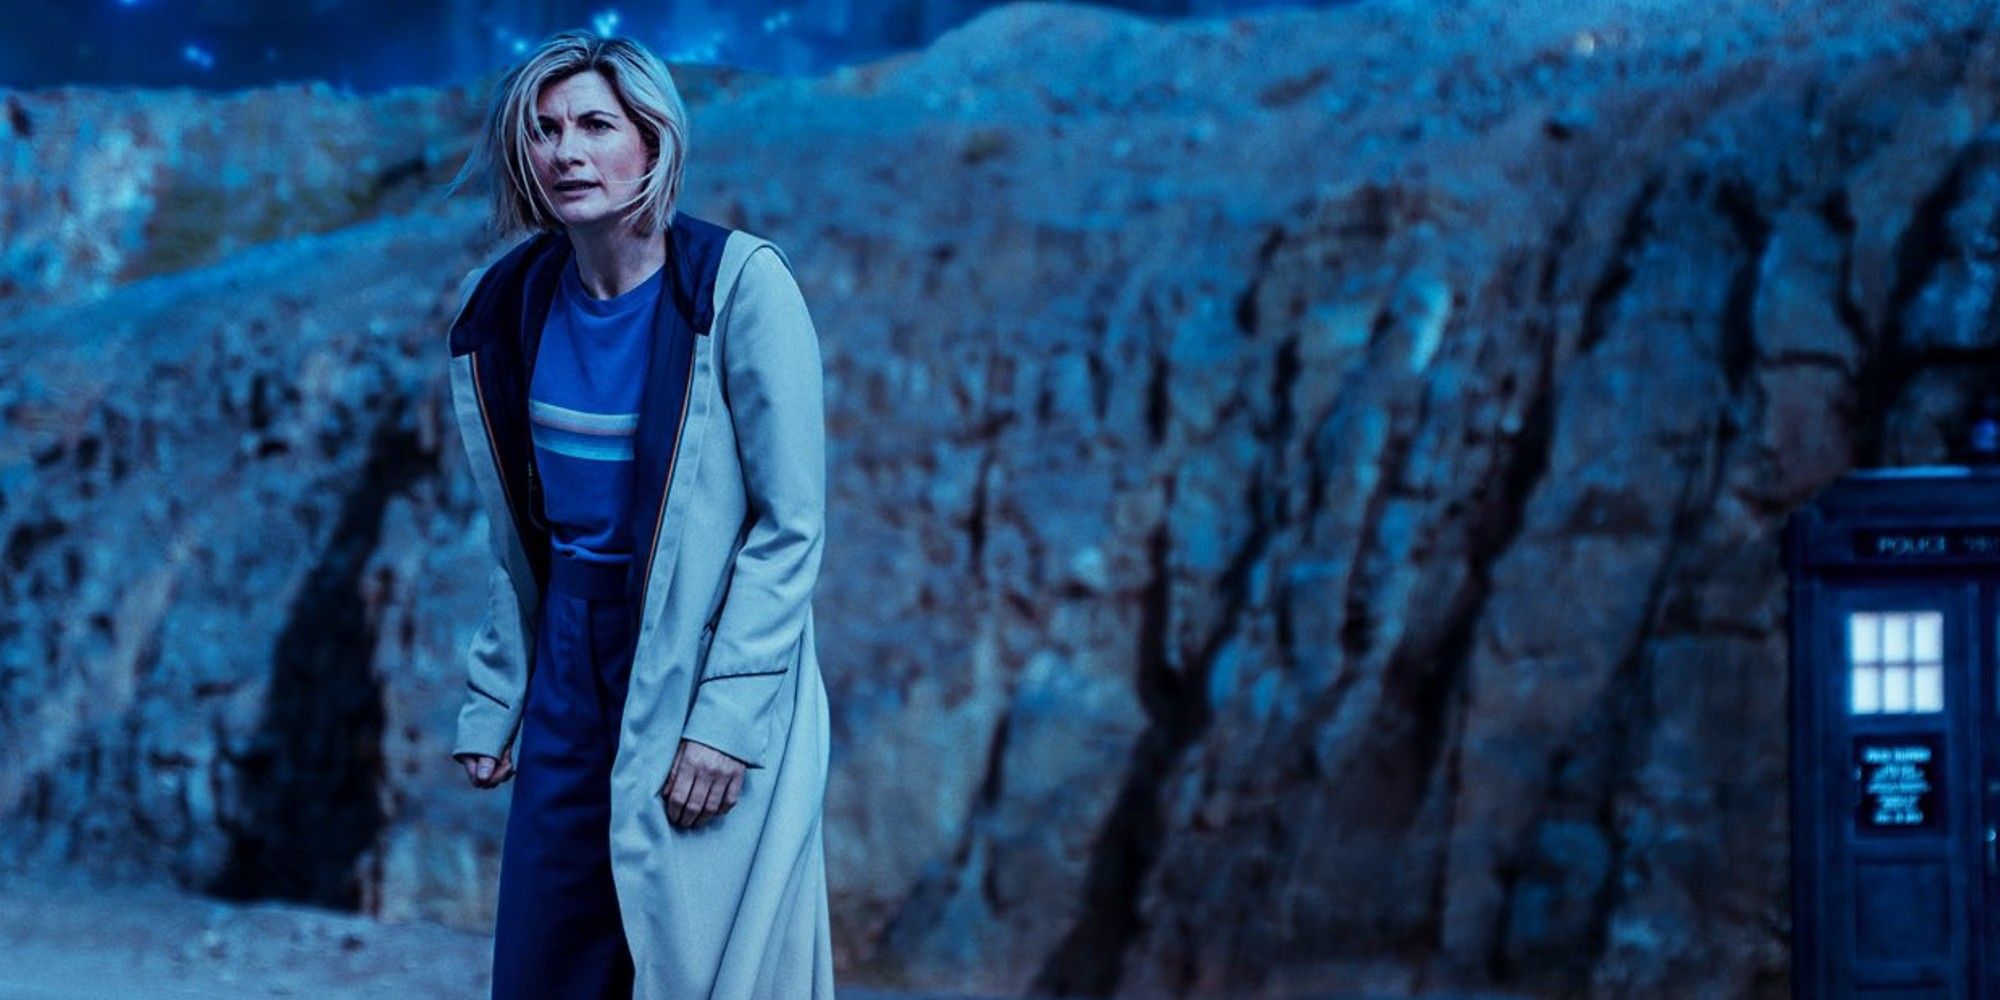 Doctor Who O Poder do Doutor Jodie Whittaker como a Décima Terceira Doutora